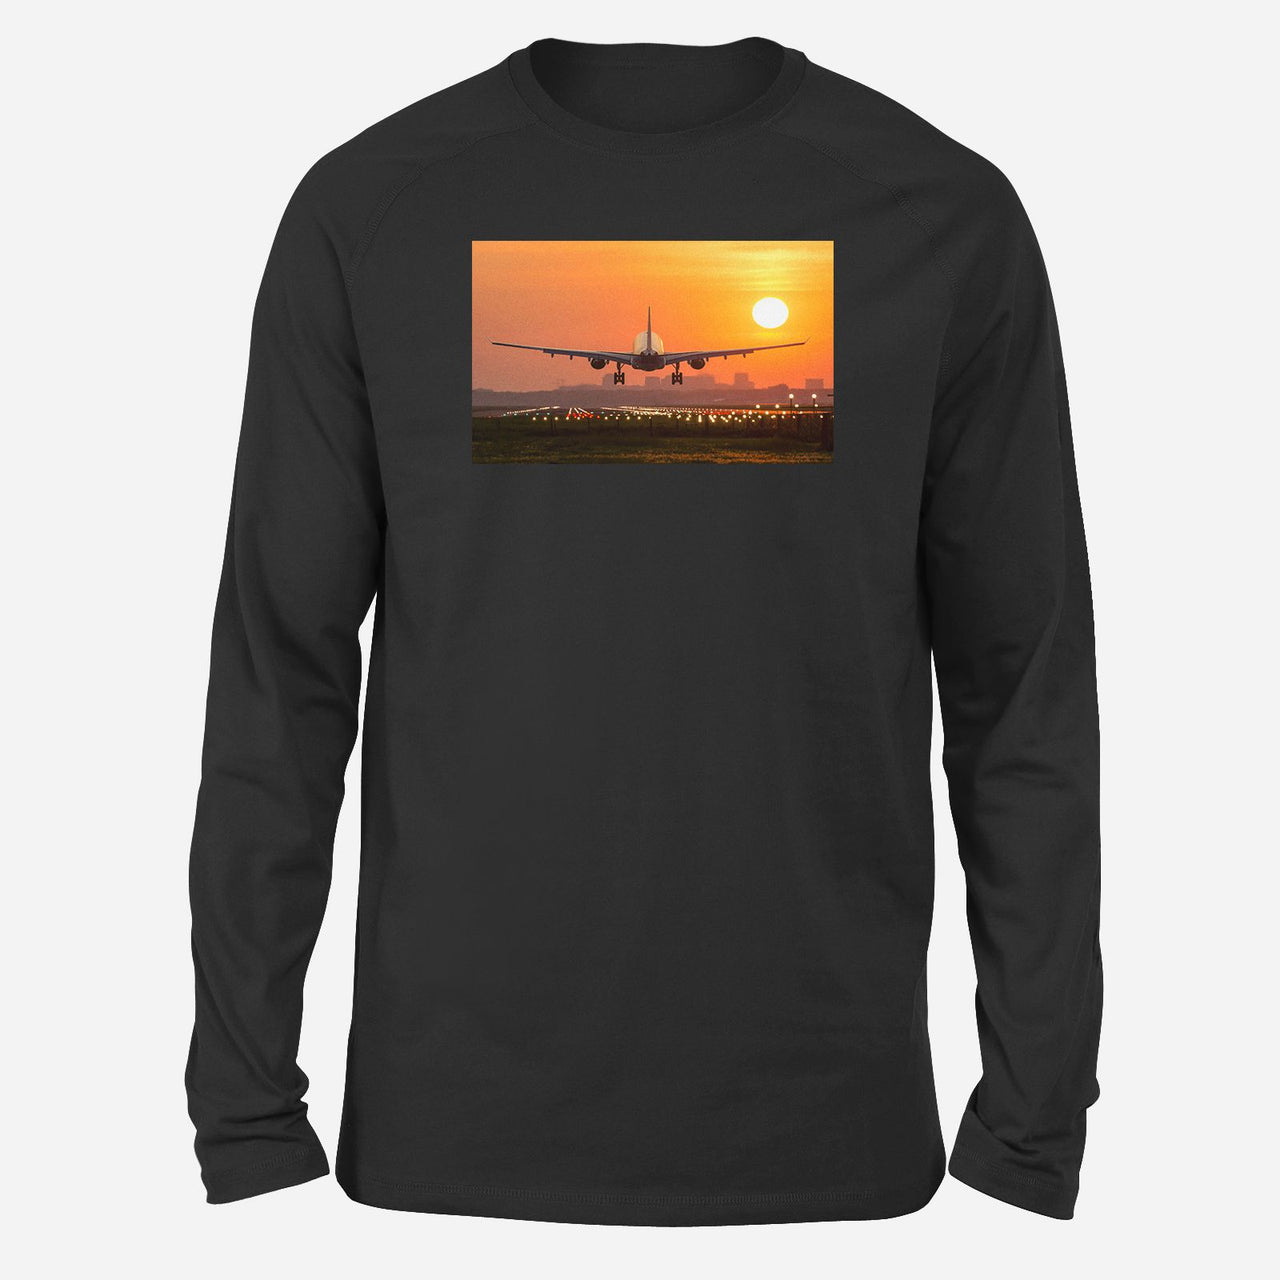 Amazing Airbus A330 Landing at Sunset Designed Long-Sleeve T-Shirts